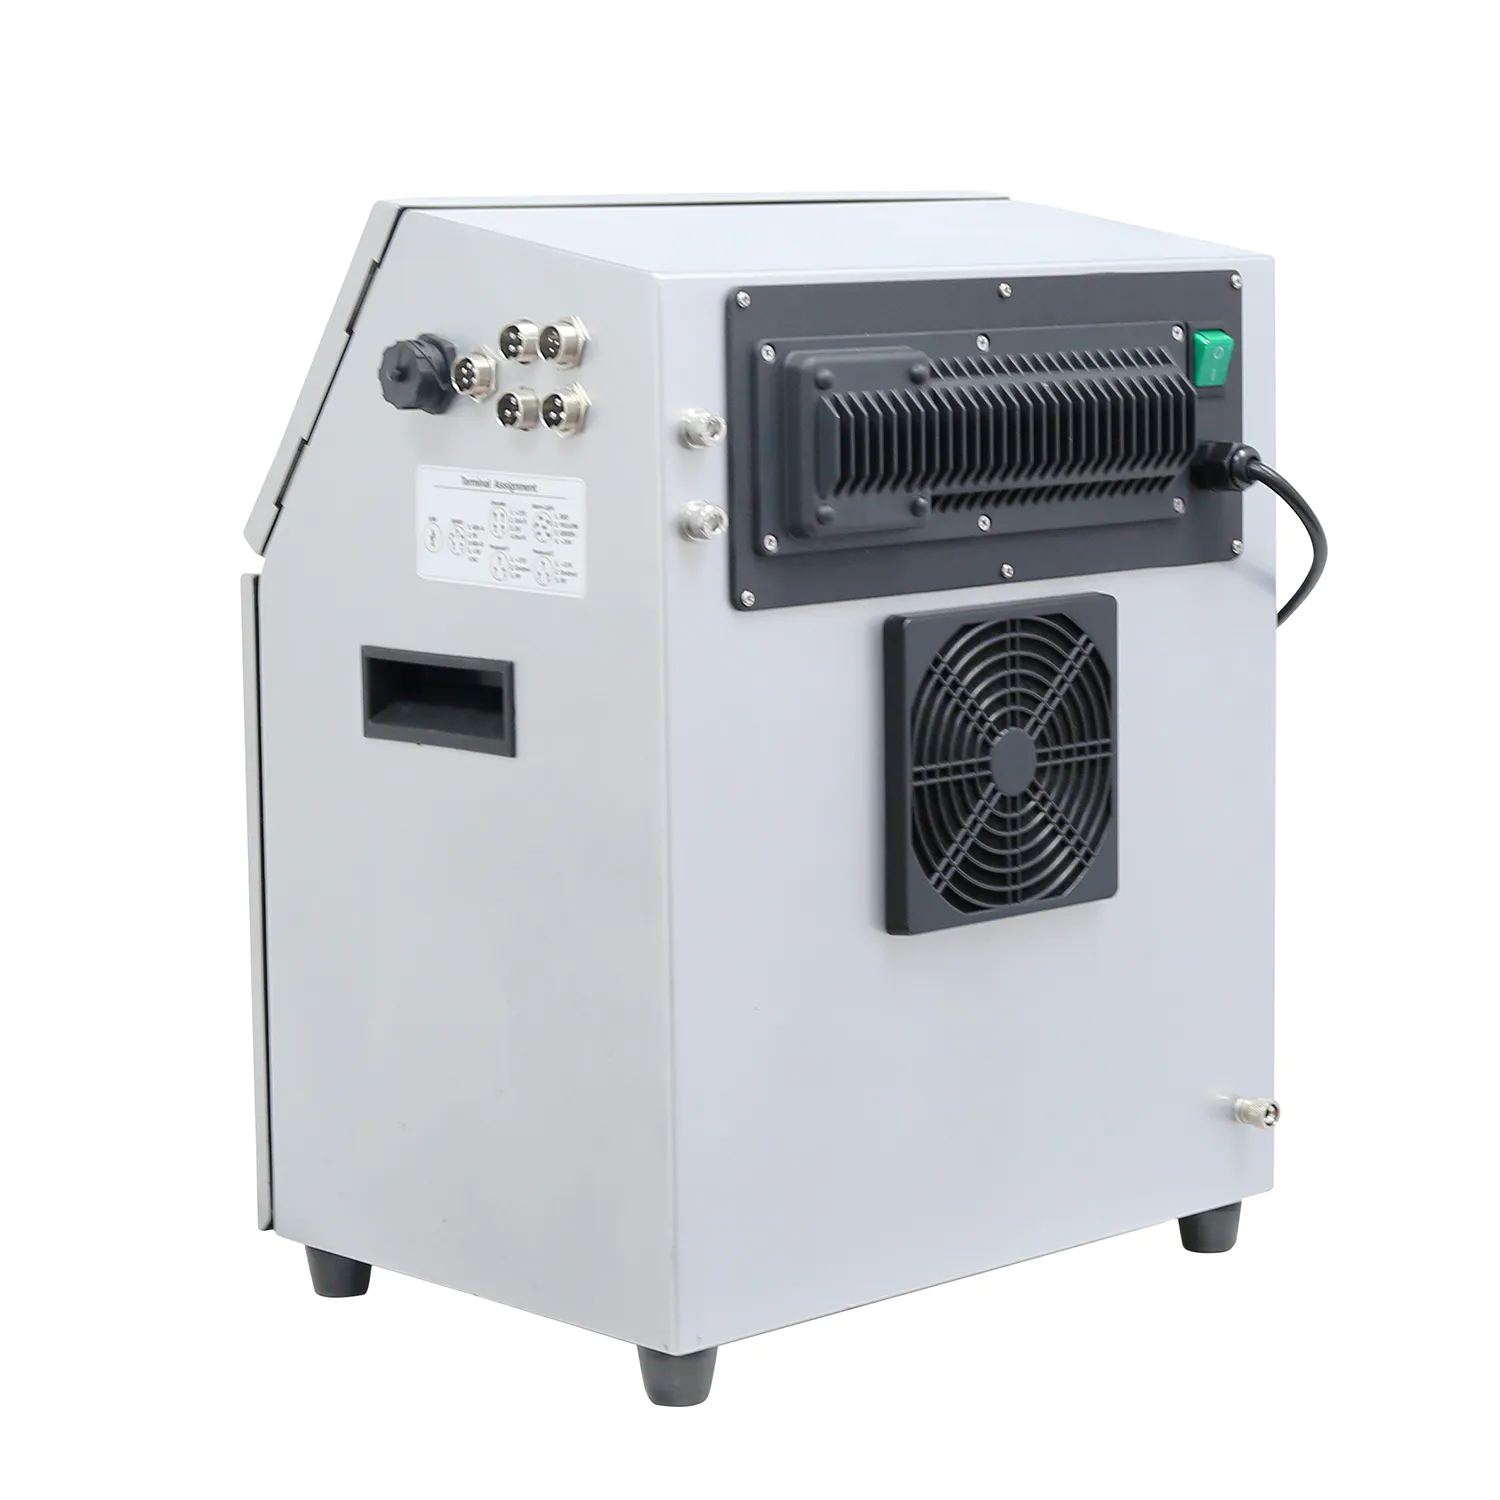 Lead Tech Lt800 Digital Printing Machine